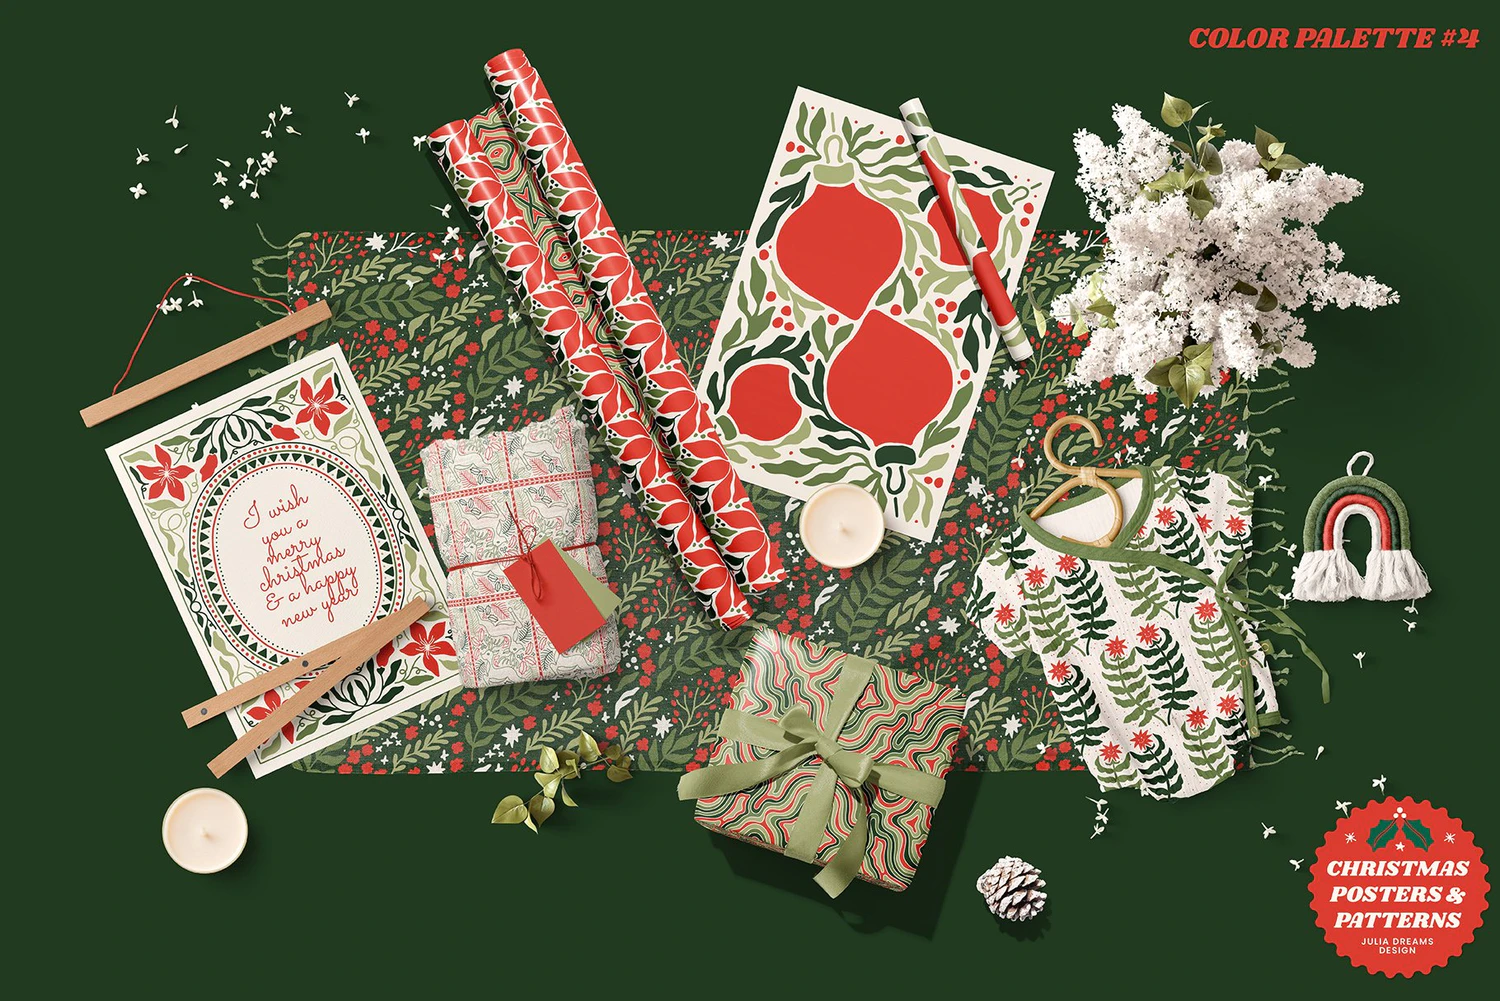 5261 70s复古元素套装圣诞节节日活动海报设计的图案元素纹理素材集合包 Christmas Posters Patterns Bundle@GOOODME.COM